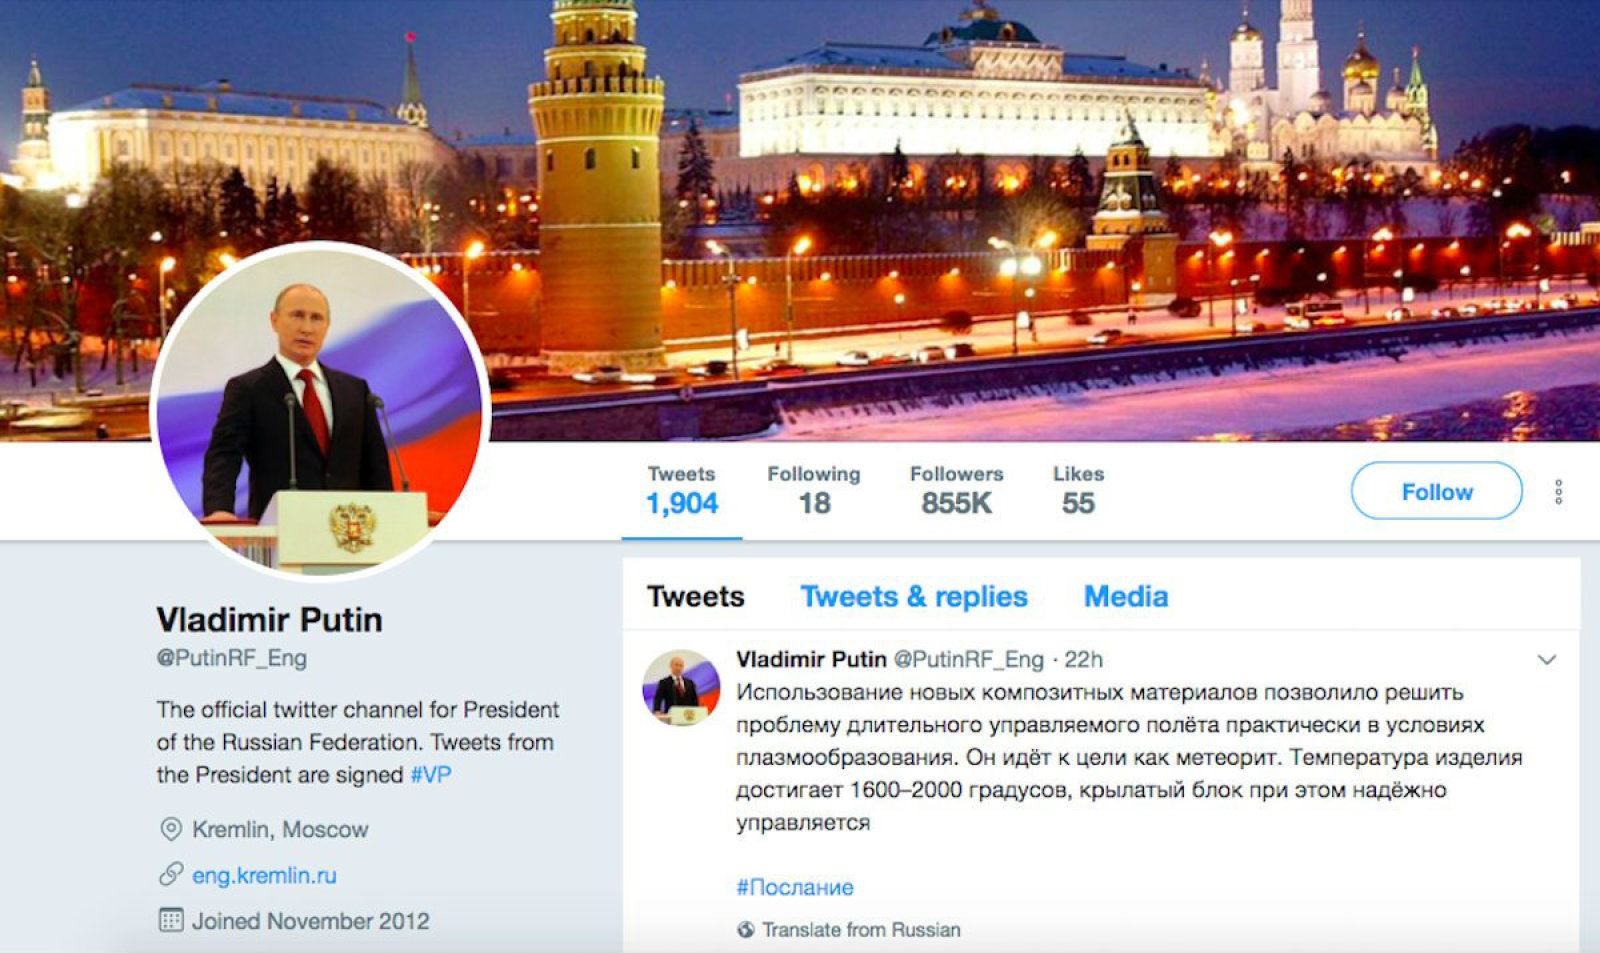 Twitter bans fake Putin account that the real Putin followed | DeviceDaily.com